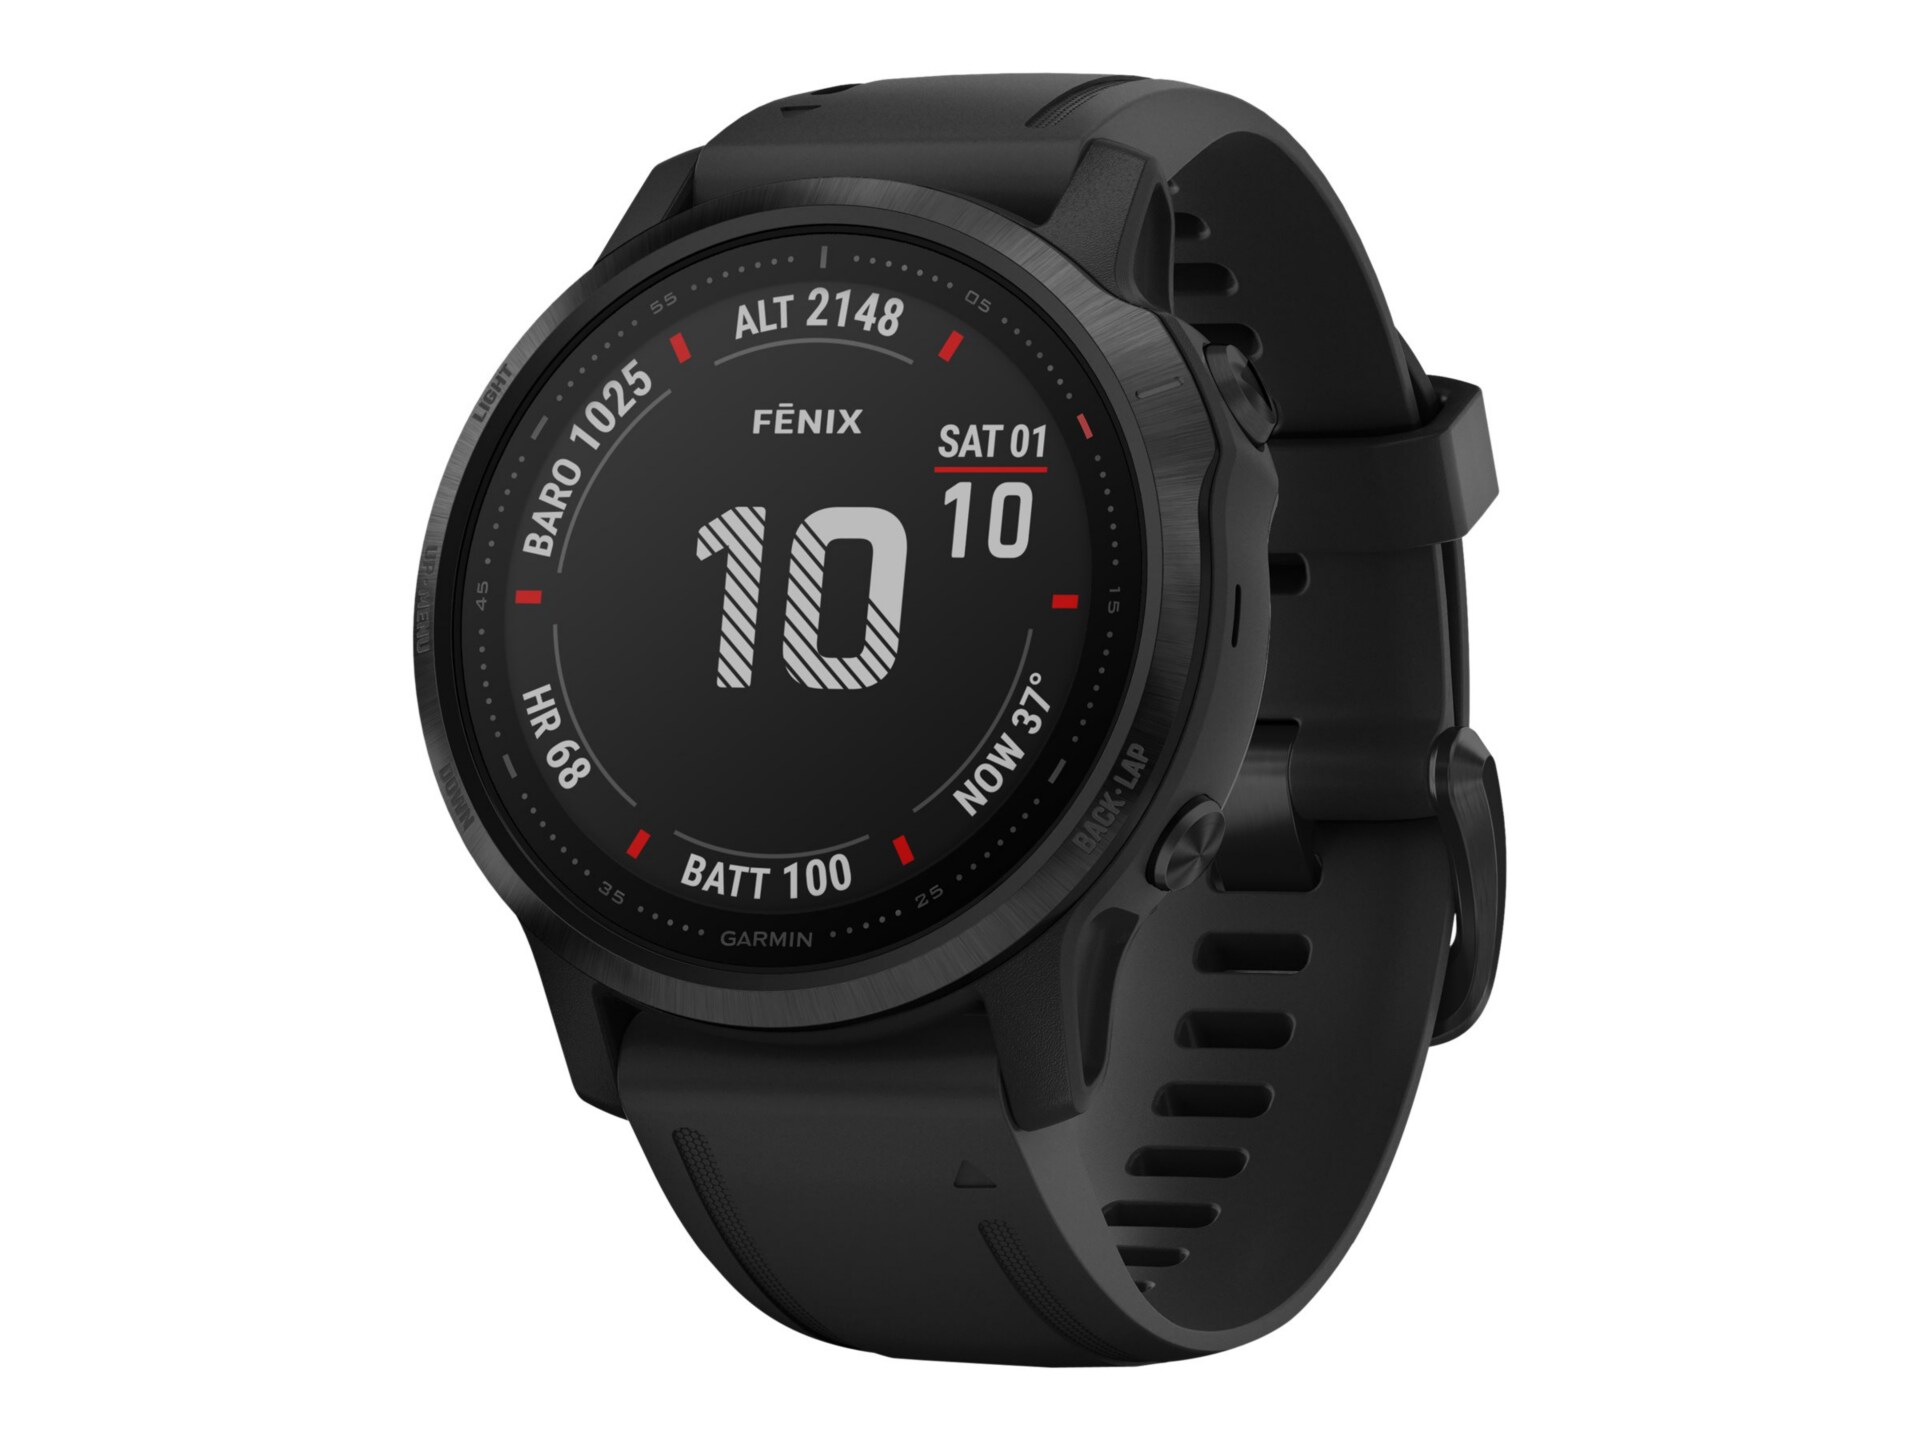 Garmin fēnix 6S Pro - black - sport watch with band - black - 32 GB